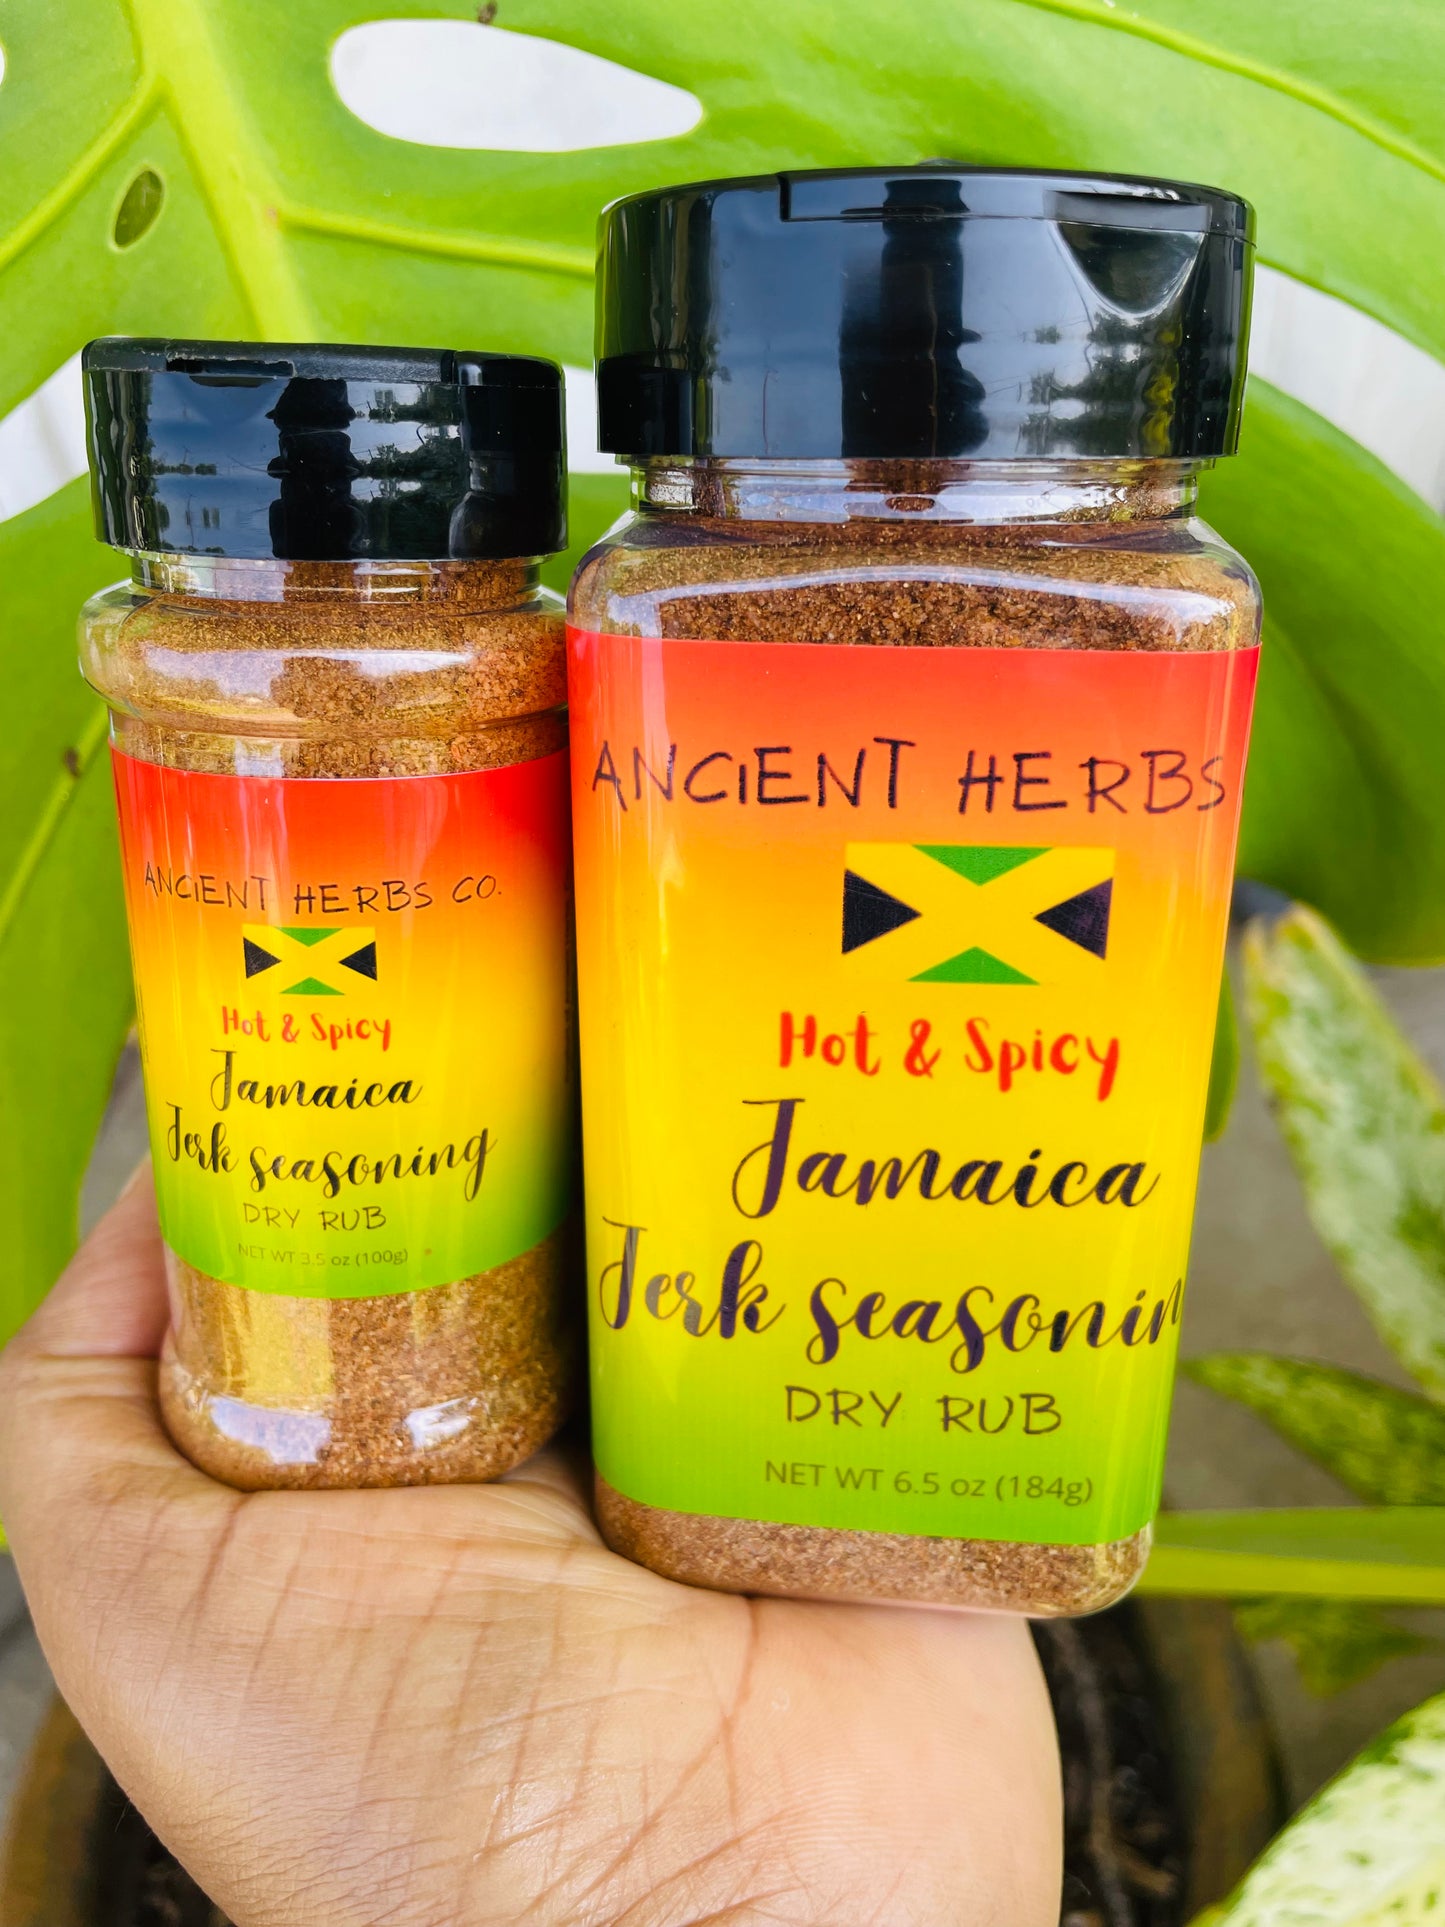 Jamaica Jerk Seasoning Dry Rub Hot & spicy